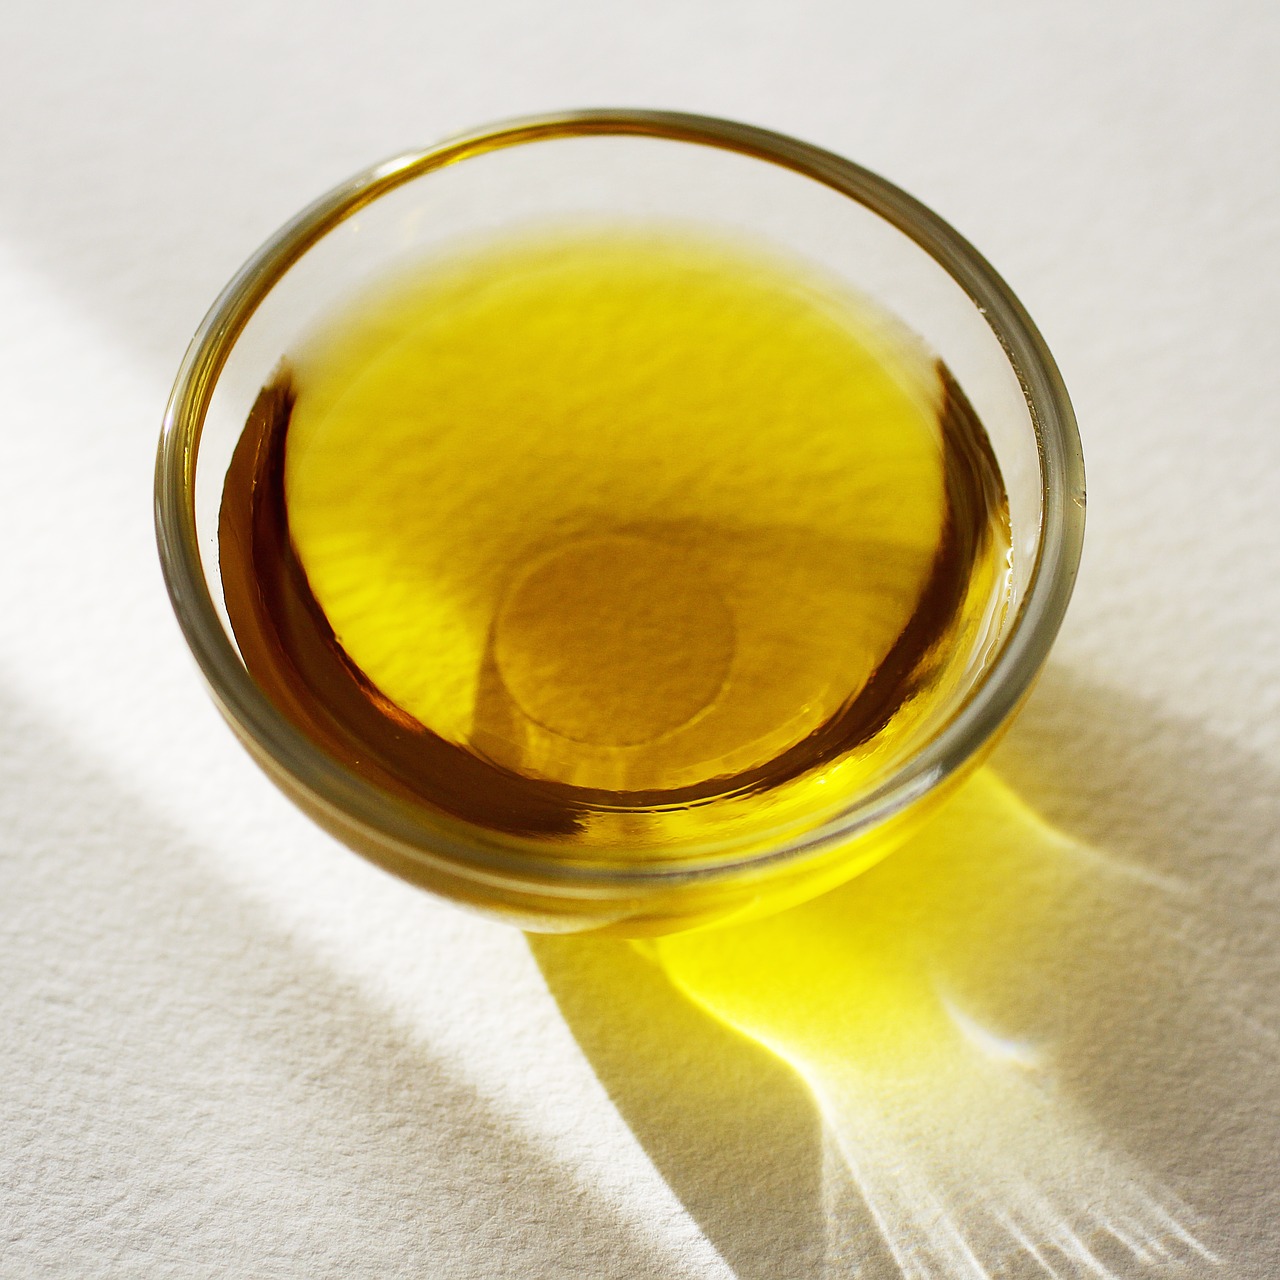 oil olive oil mat free photo